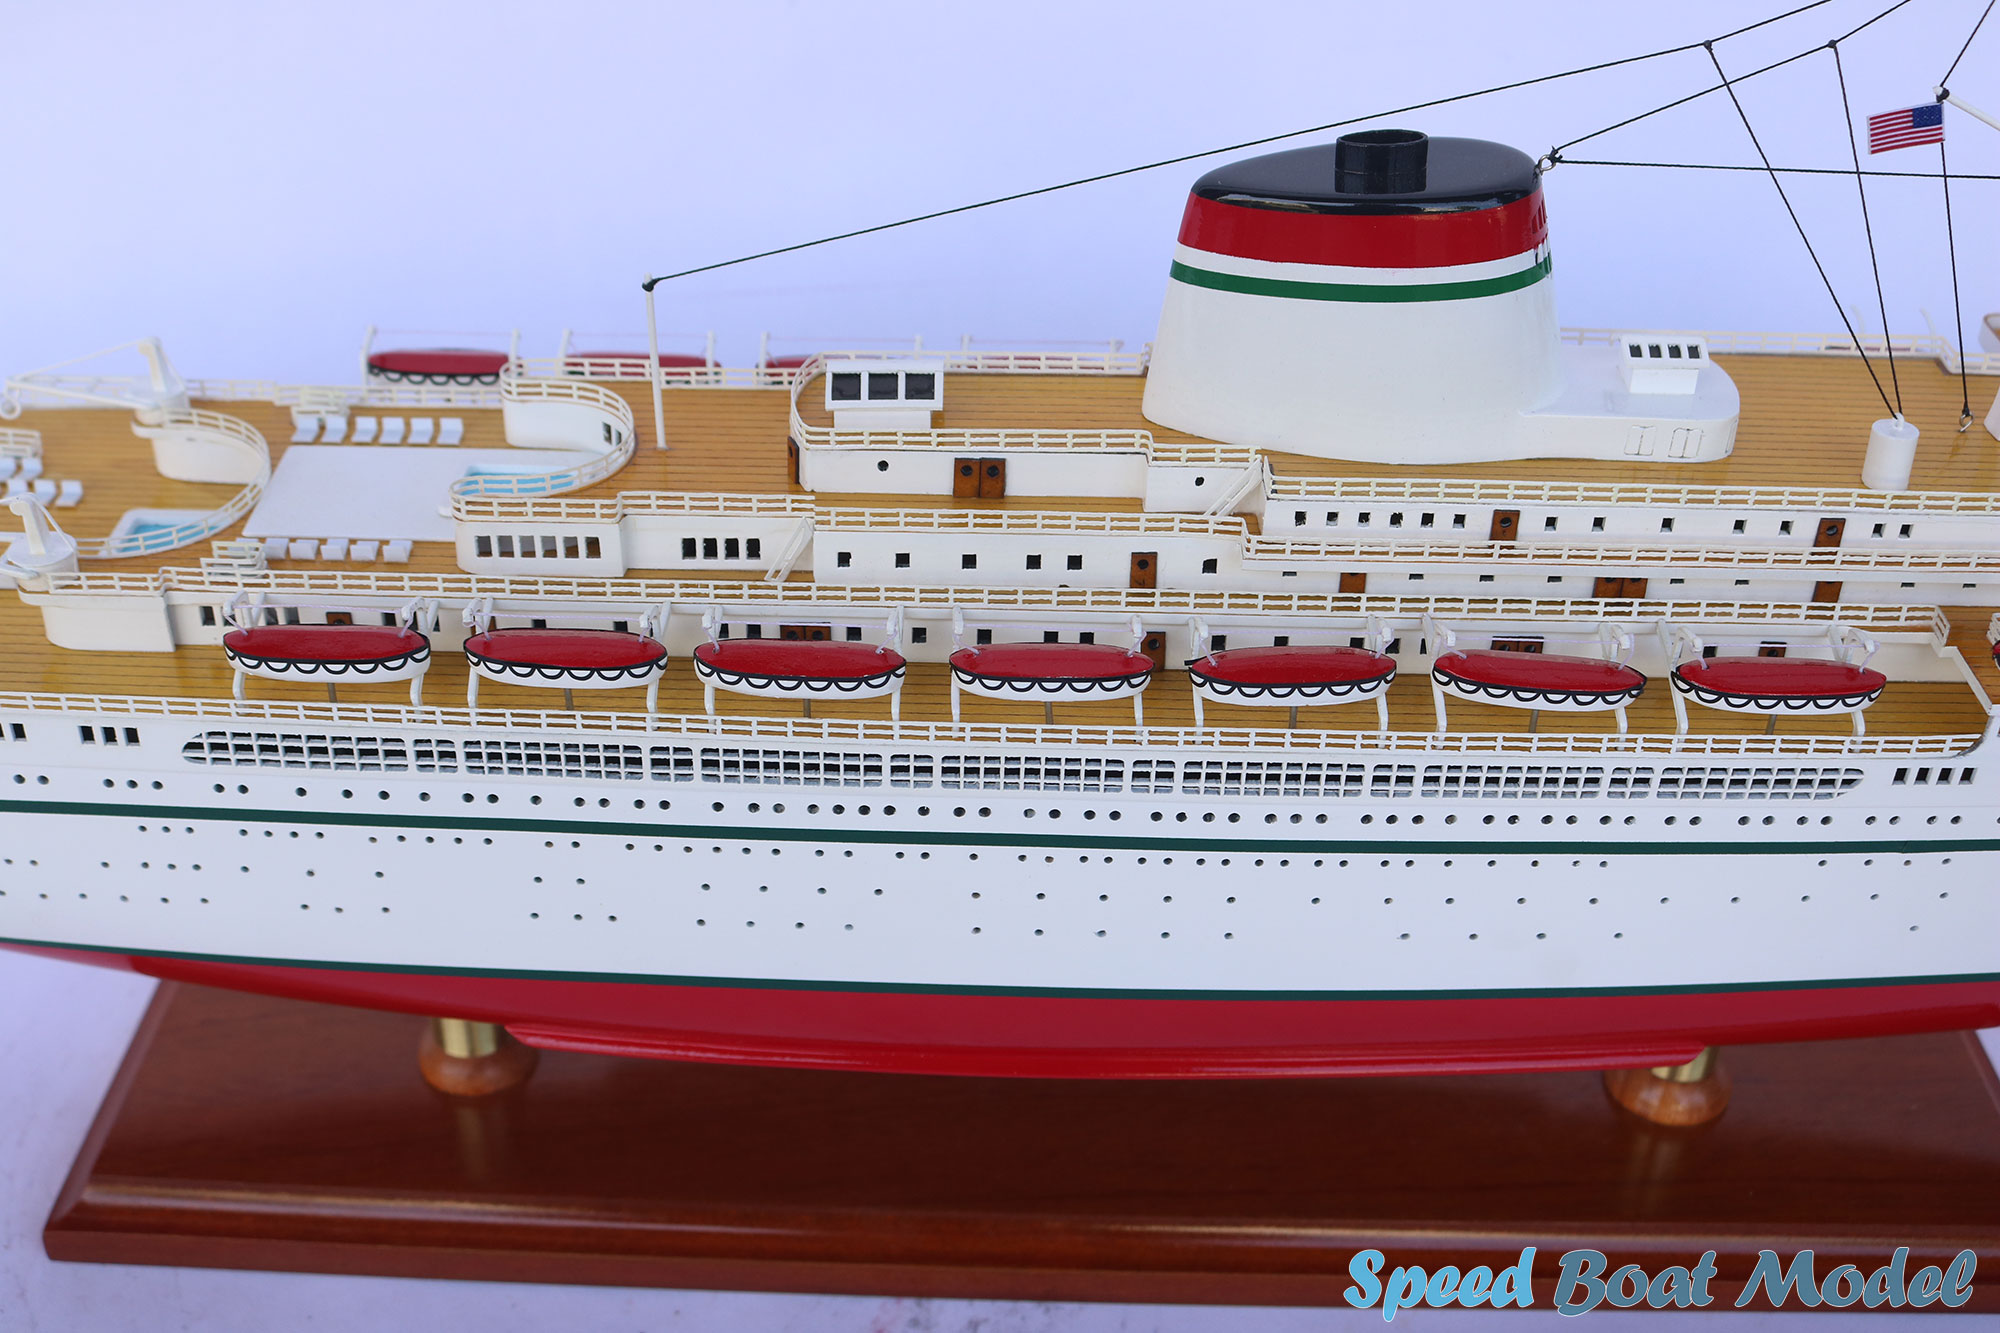 Red & Black Ss Cristorofo Colombo Cruise Ship Model 33.4